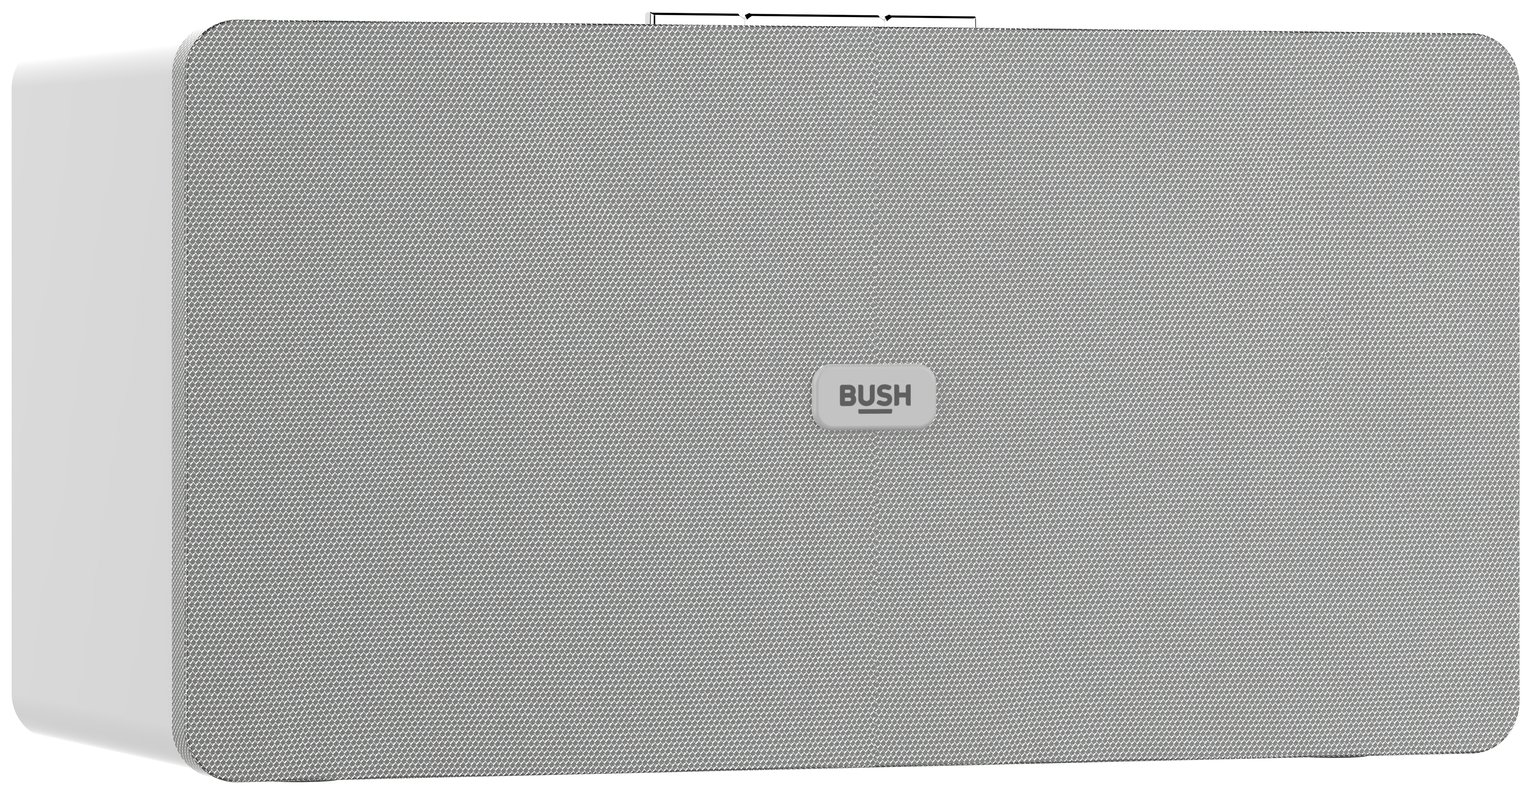 Bush Bluetooth Speaker Review